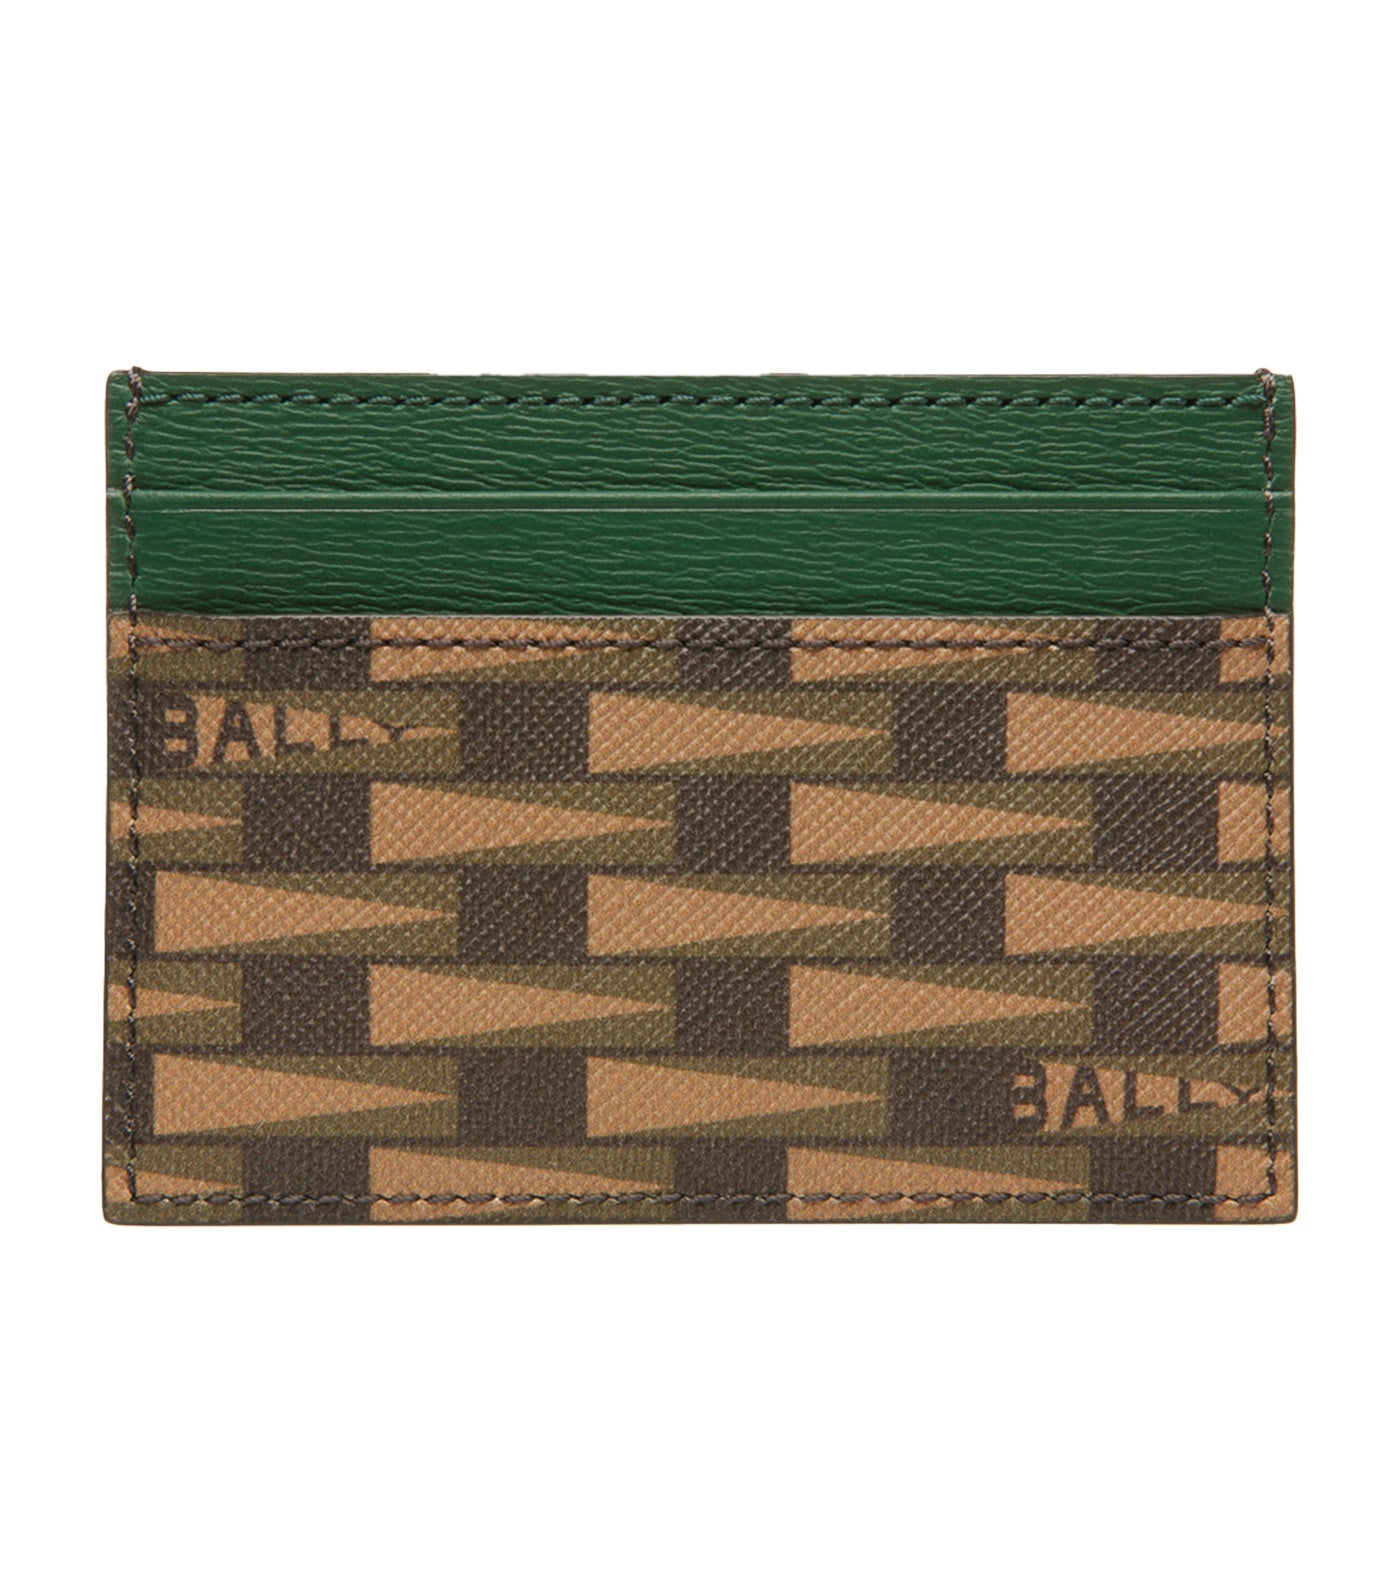 Bally Pennant Business Card Holder Multi Green